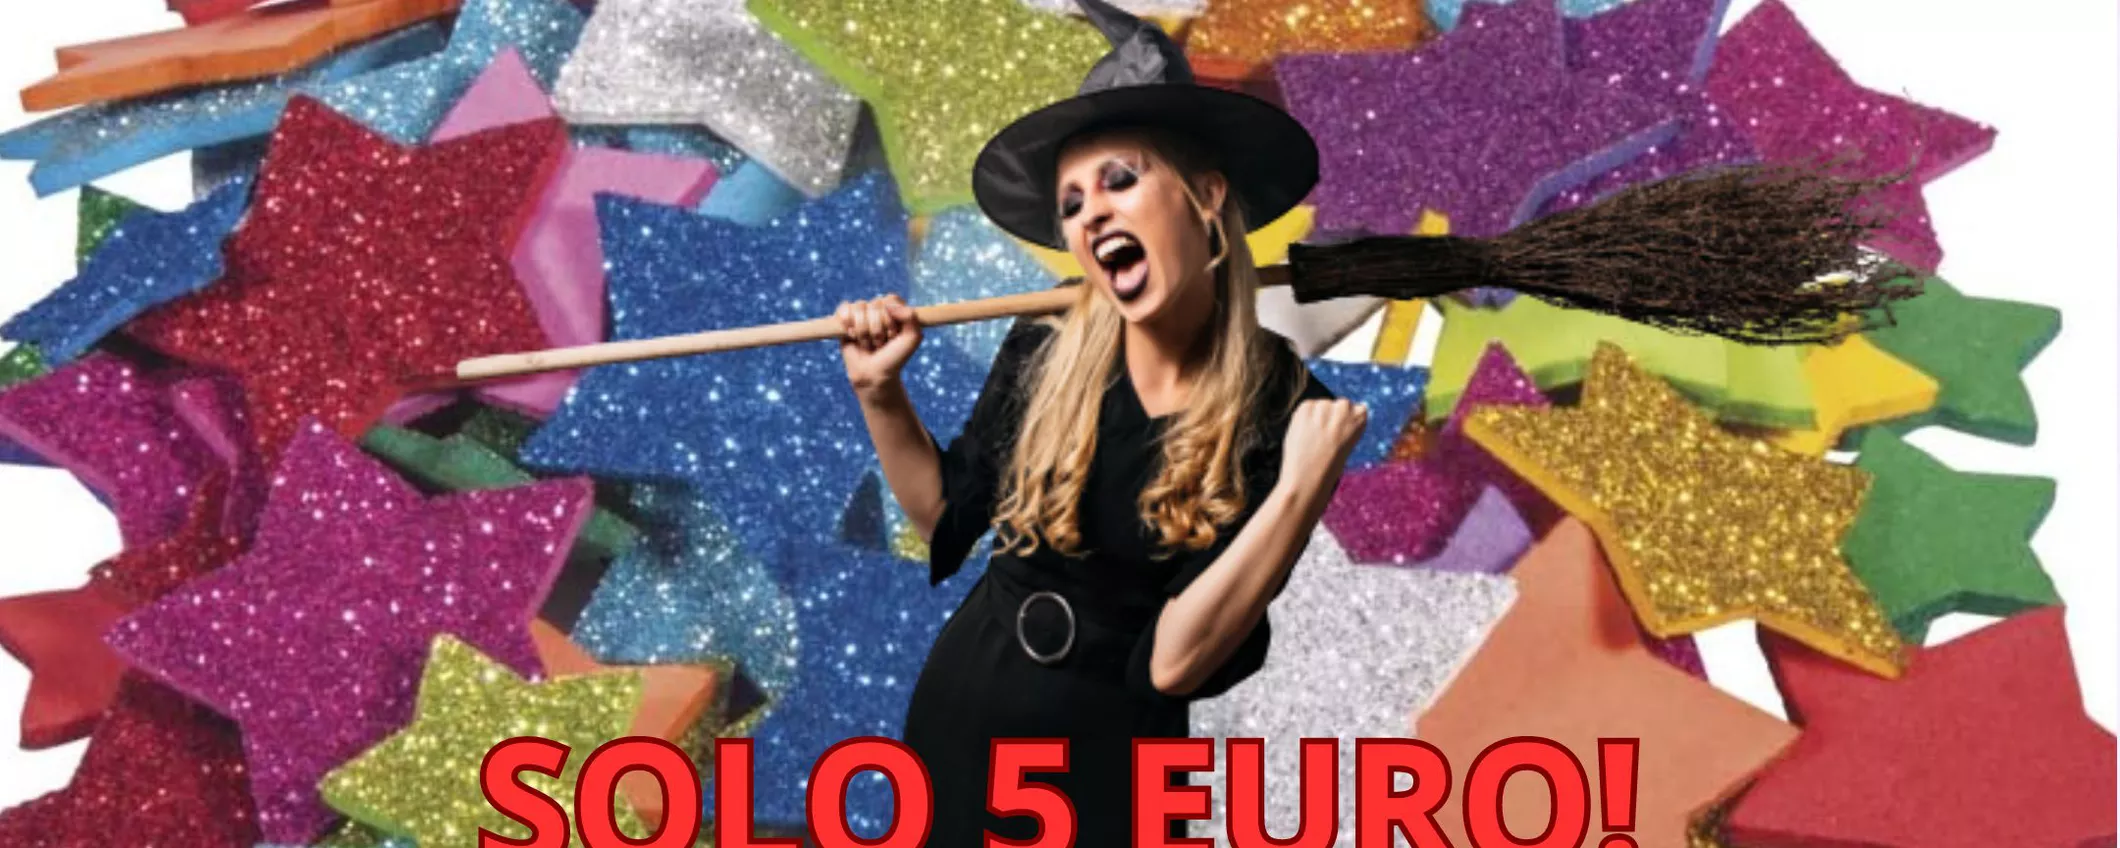 Halloween si avvicina: 100 stelle glitter a soli 5 euro!